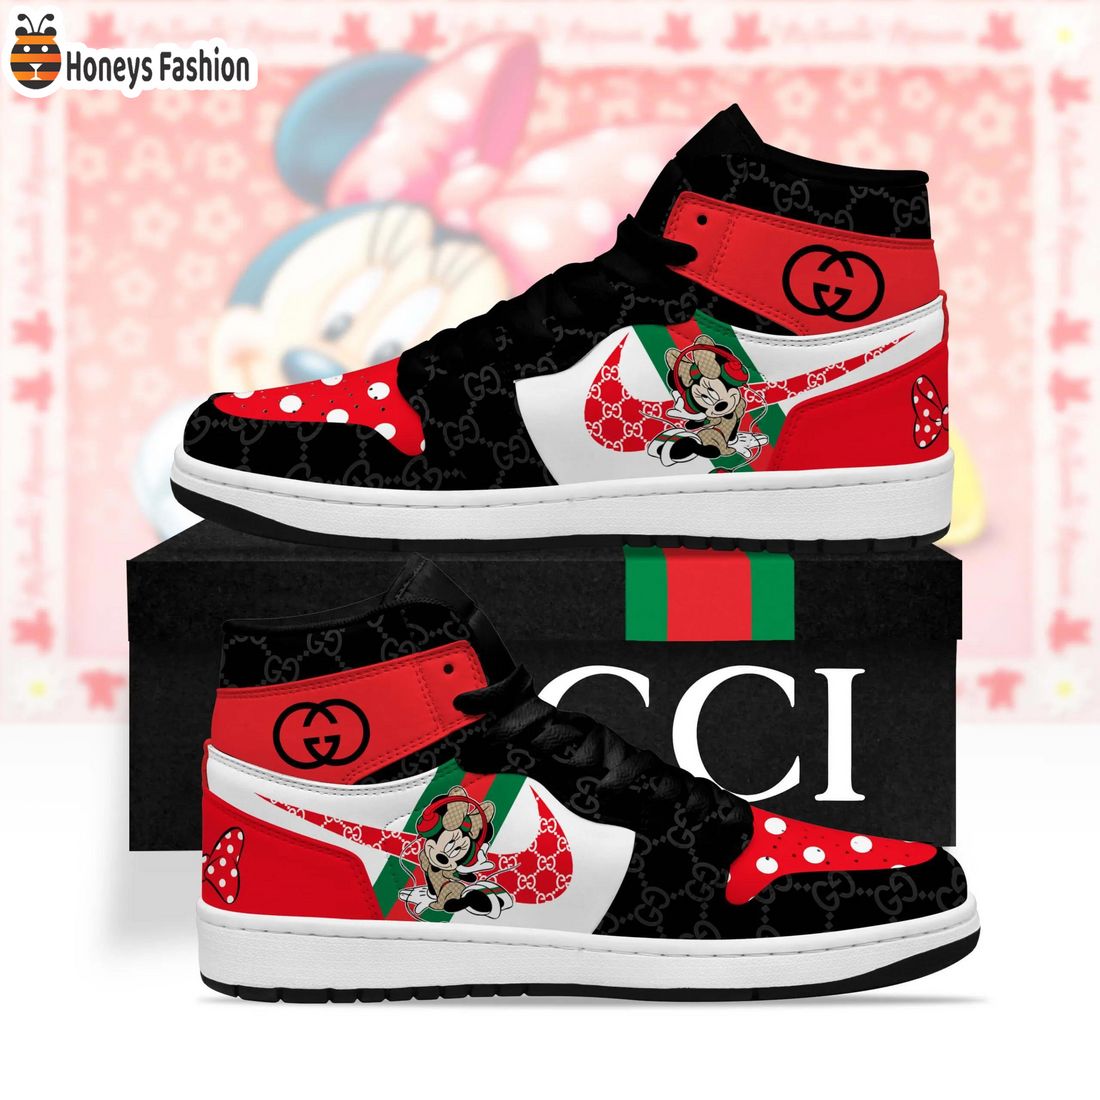 Gucci x Minnie Mouse Air Jordan 1 Sneakers